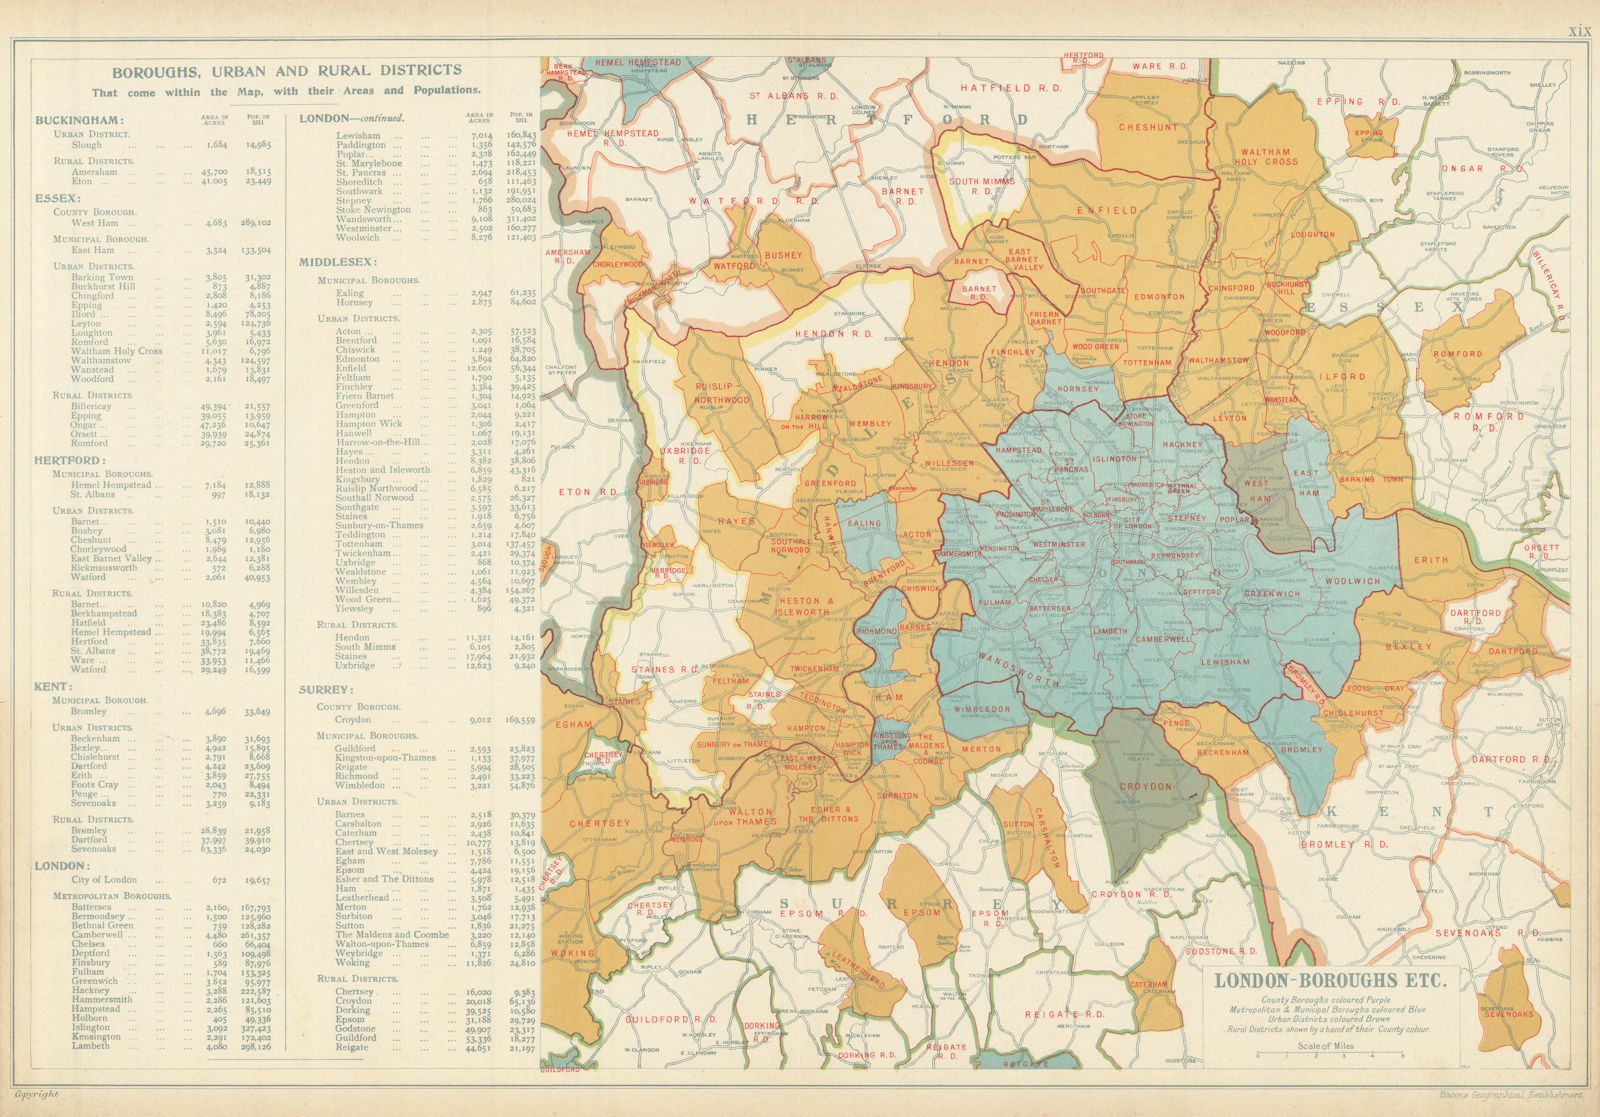 LONDON showing Municipal Boroughs, Urban Districts & Rural areas. BACON 1913 map